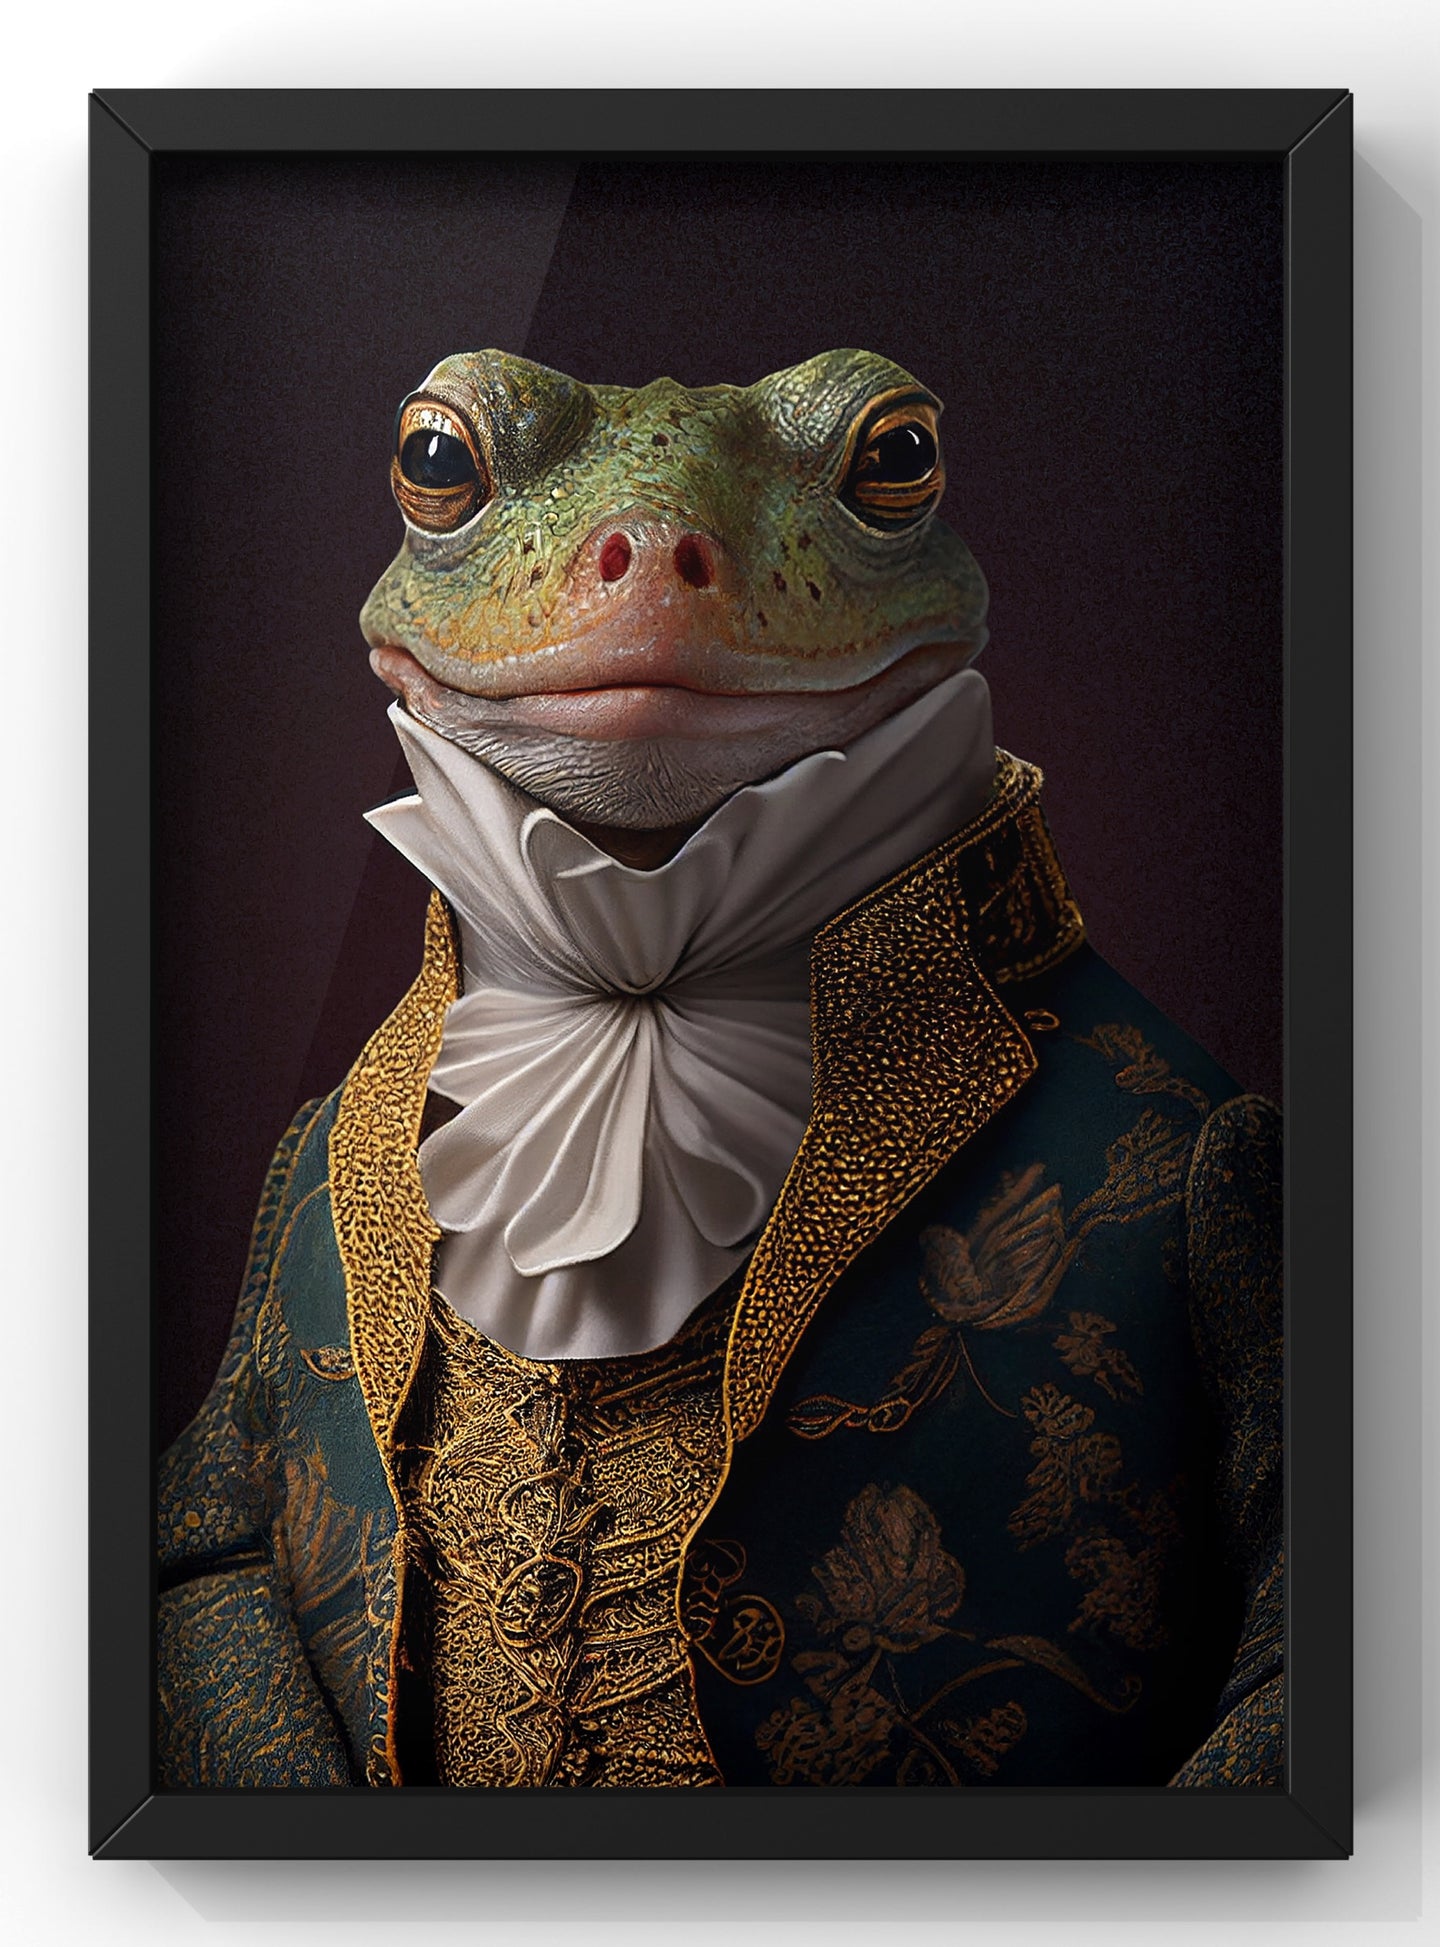 Quirky Frog Portrait | Altered Vintage Frog Renaissance Print ...